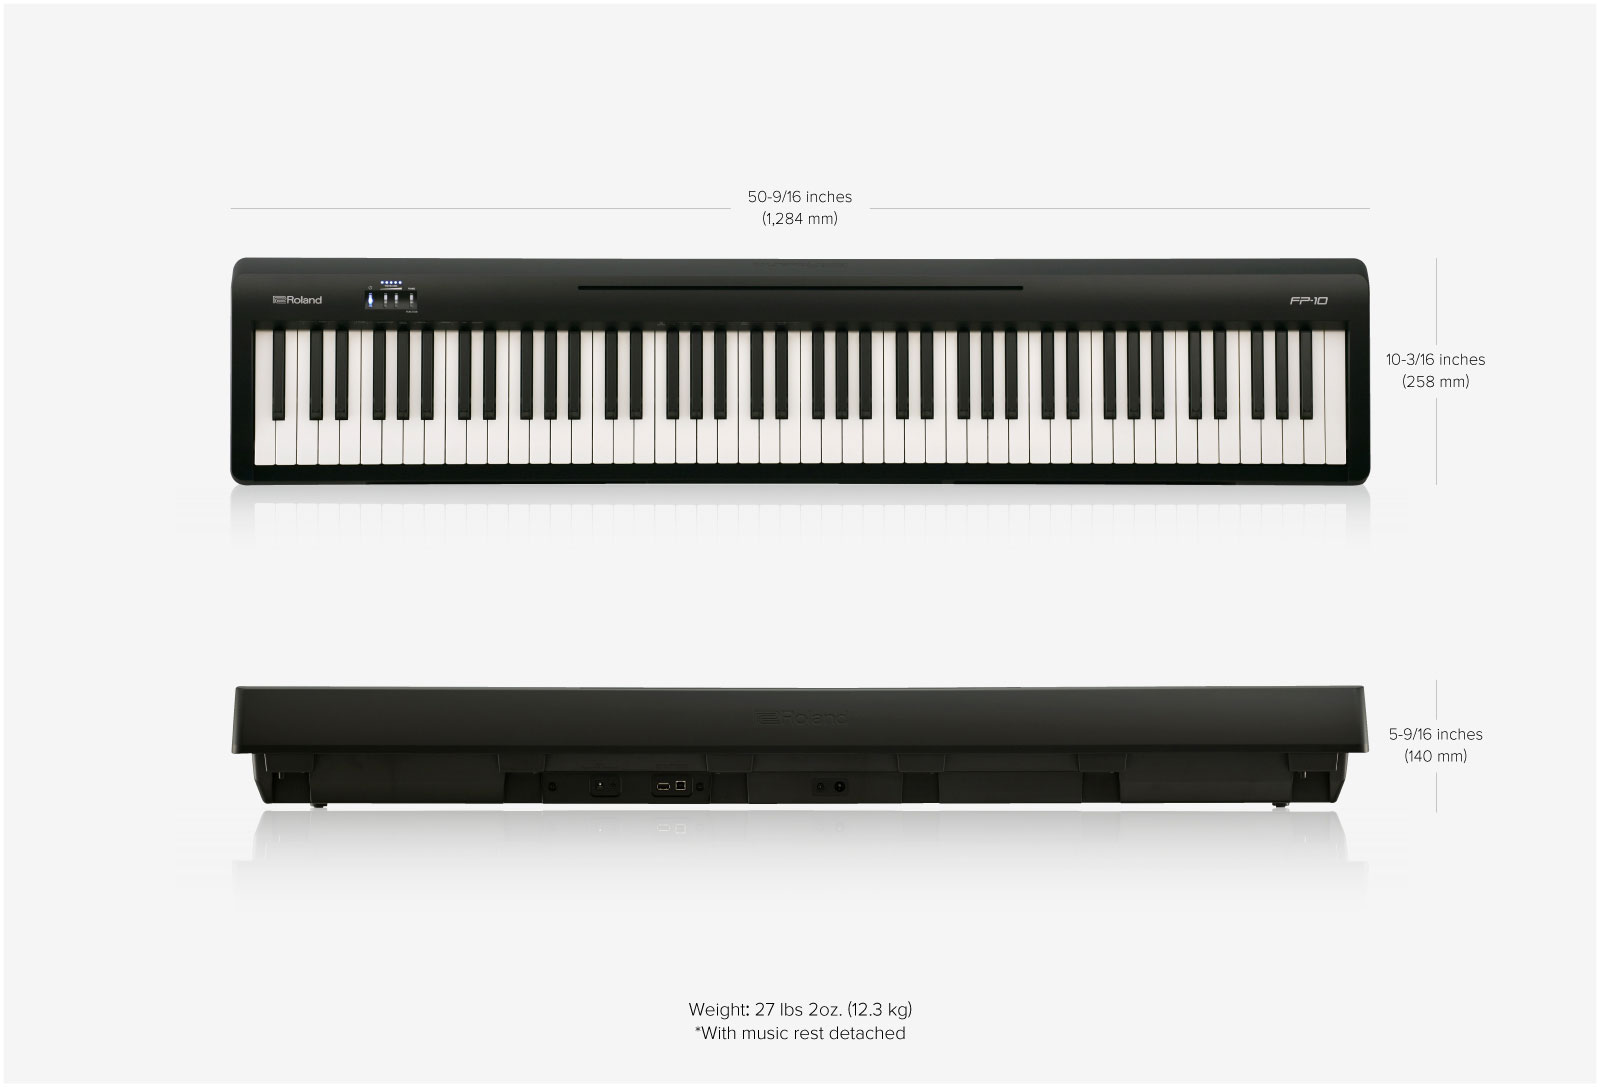 Roland - FP-10 | Portable Piano